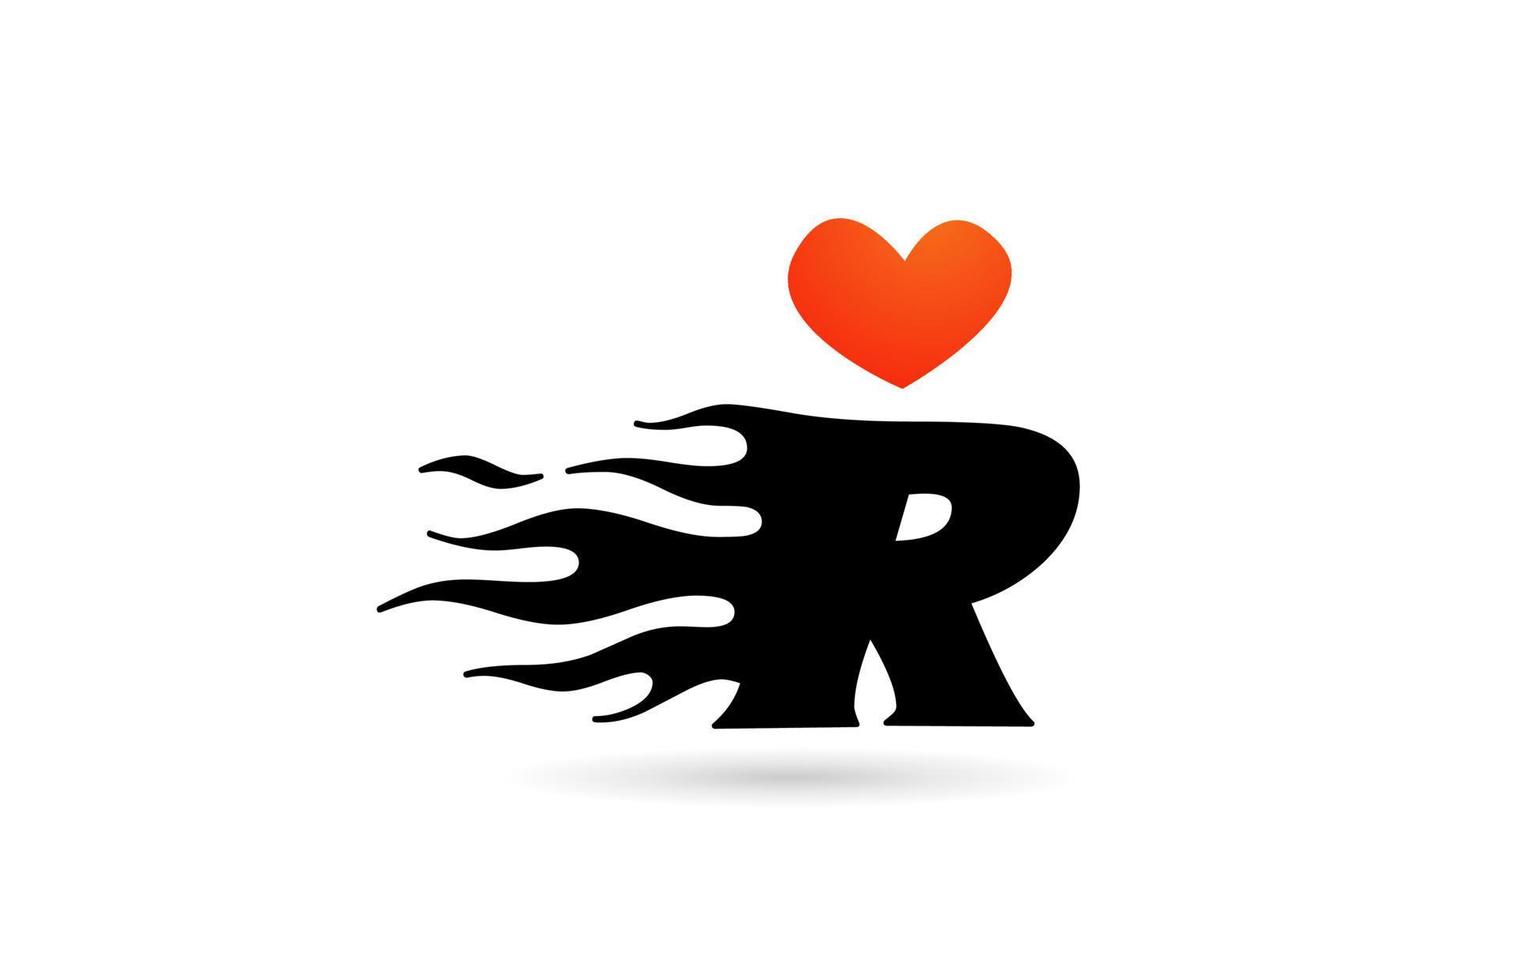 1,620 R Heart Logo Images, Stock Photos & Vectors | Shutterstock